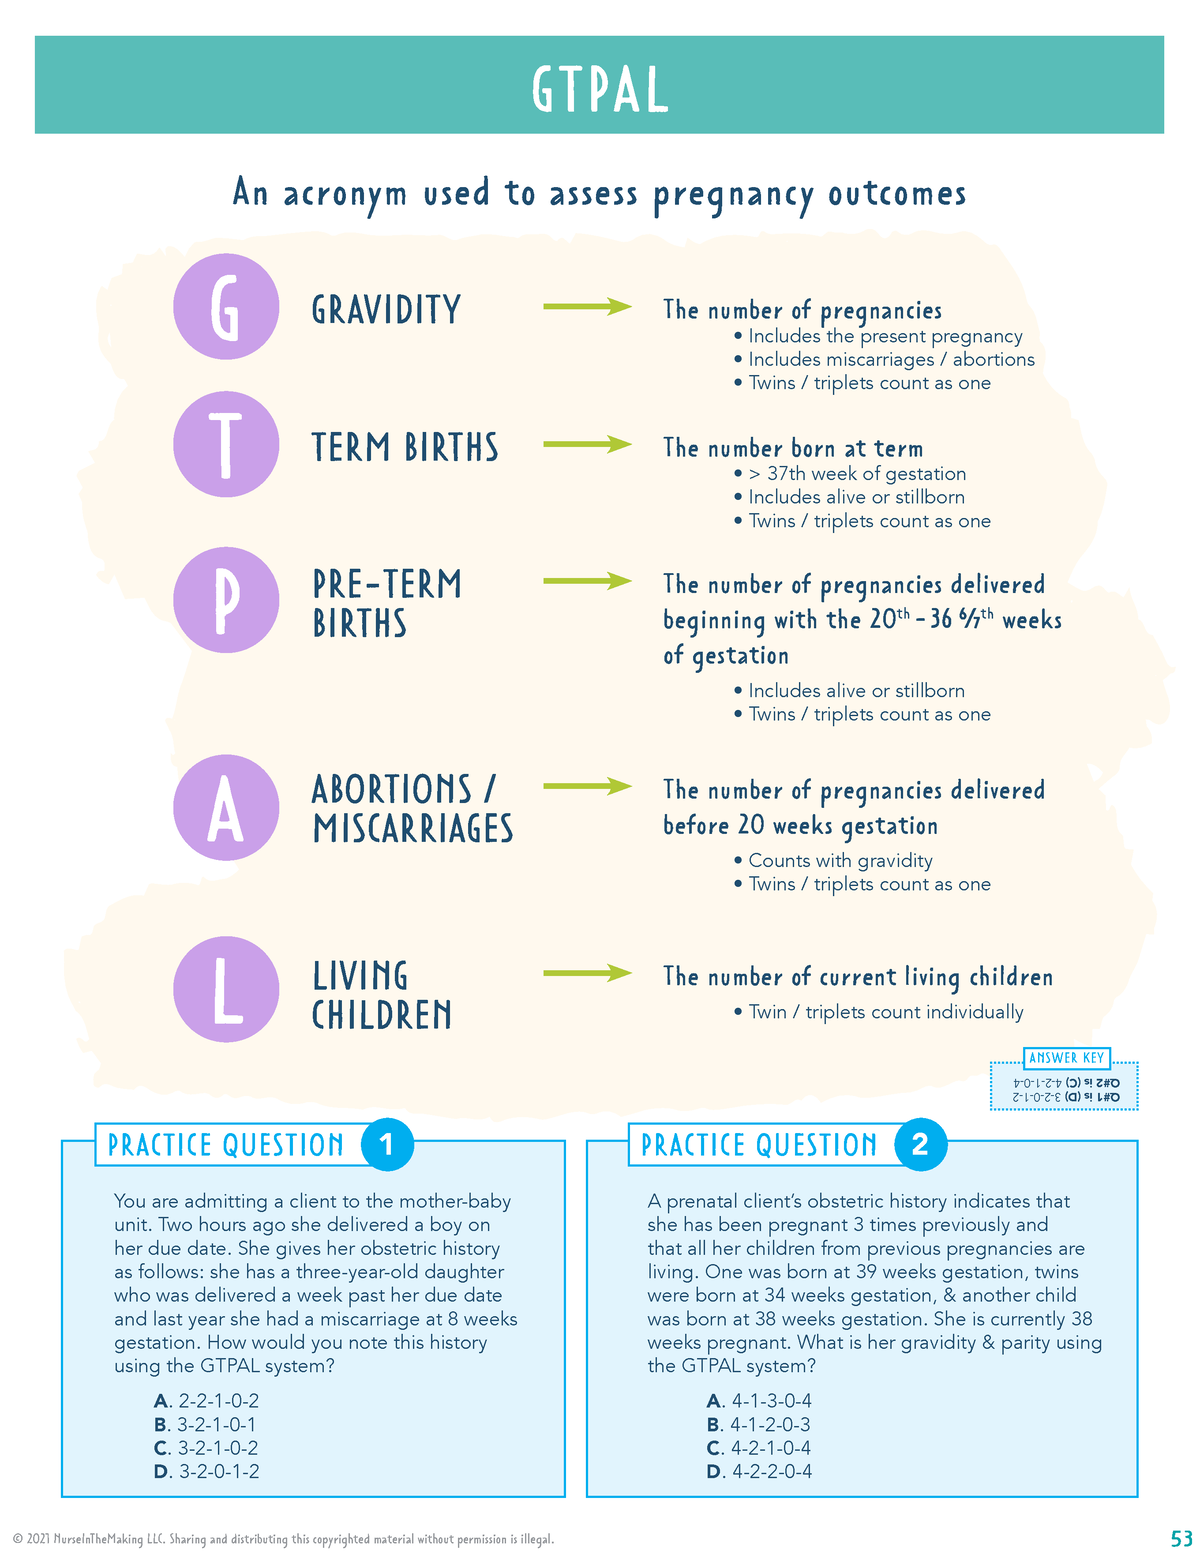 Gptpal Assessment - Study Material, Simple Nursing - Pregnancy Assessment  III Maternity Uterine - Studocu